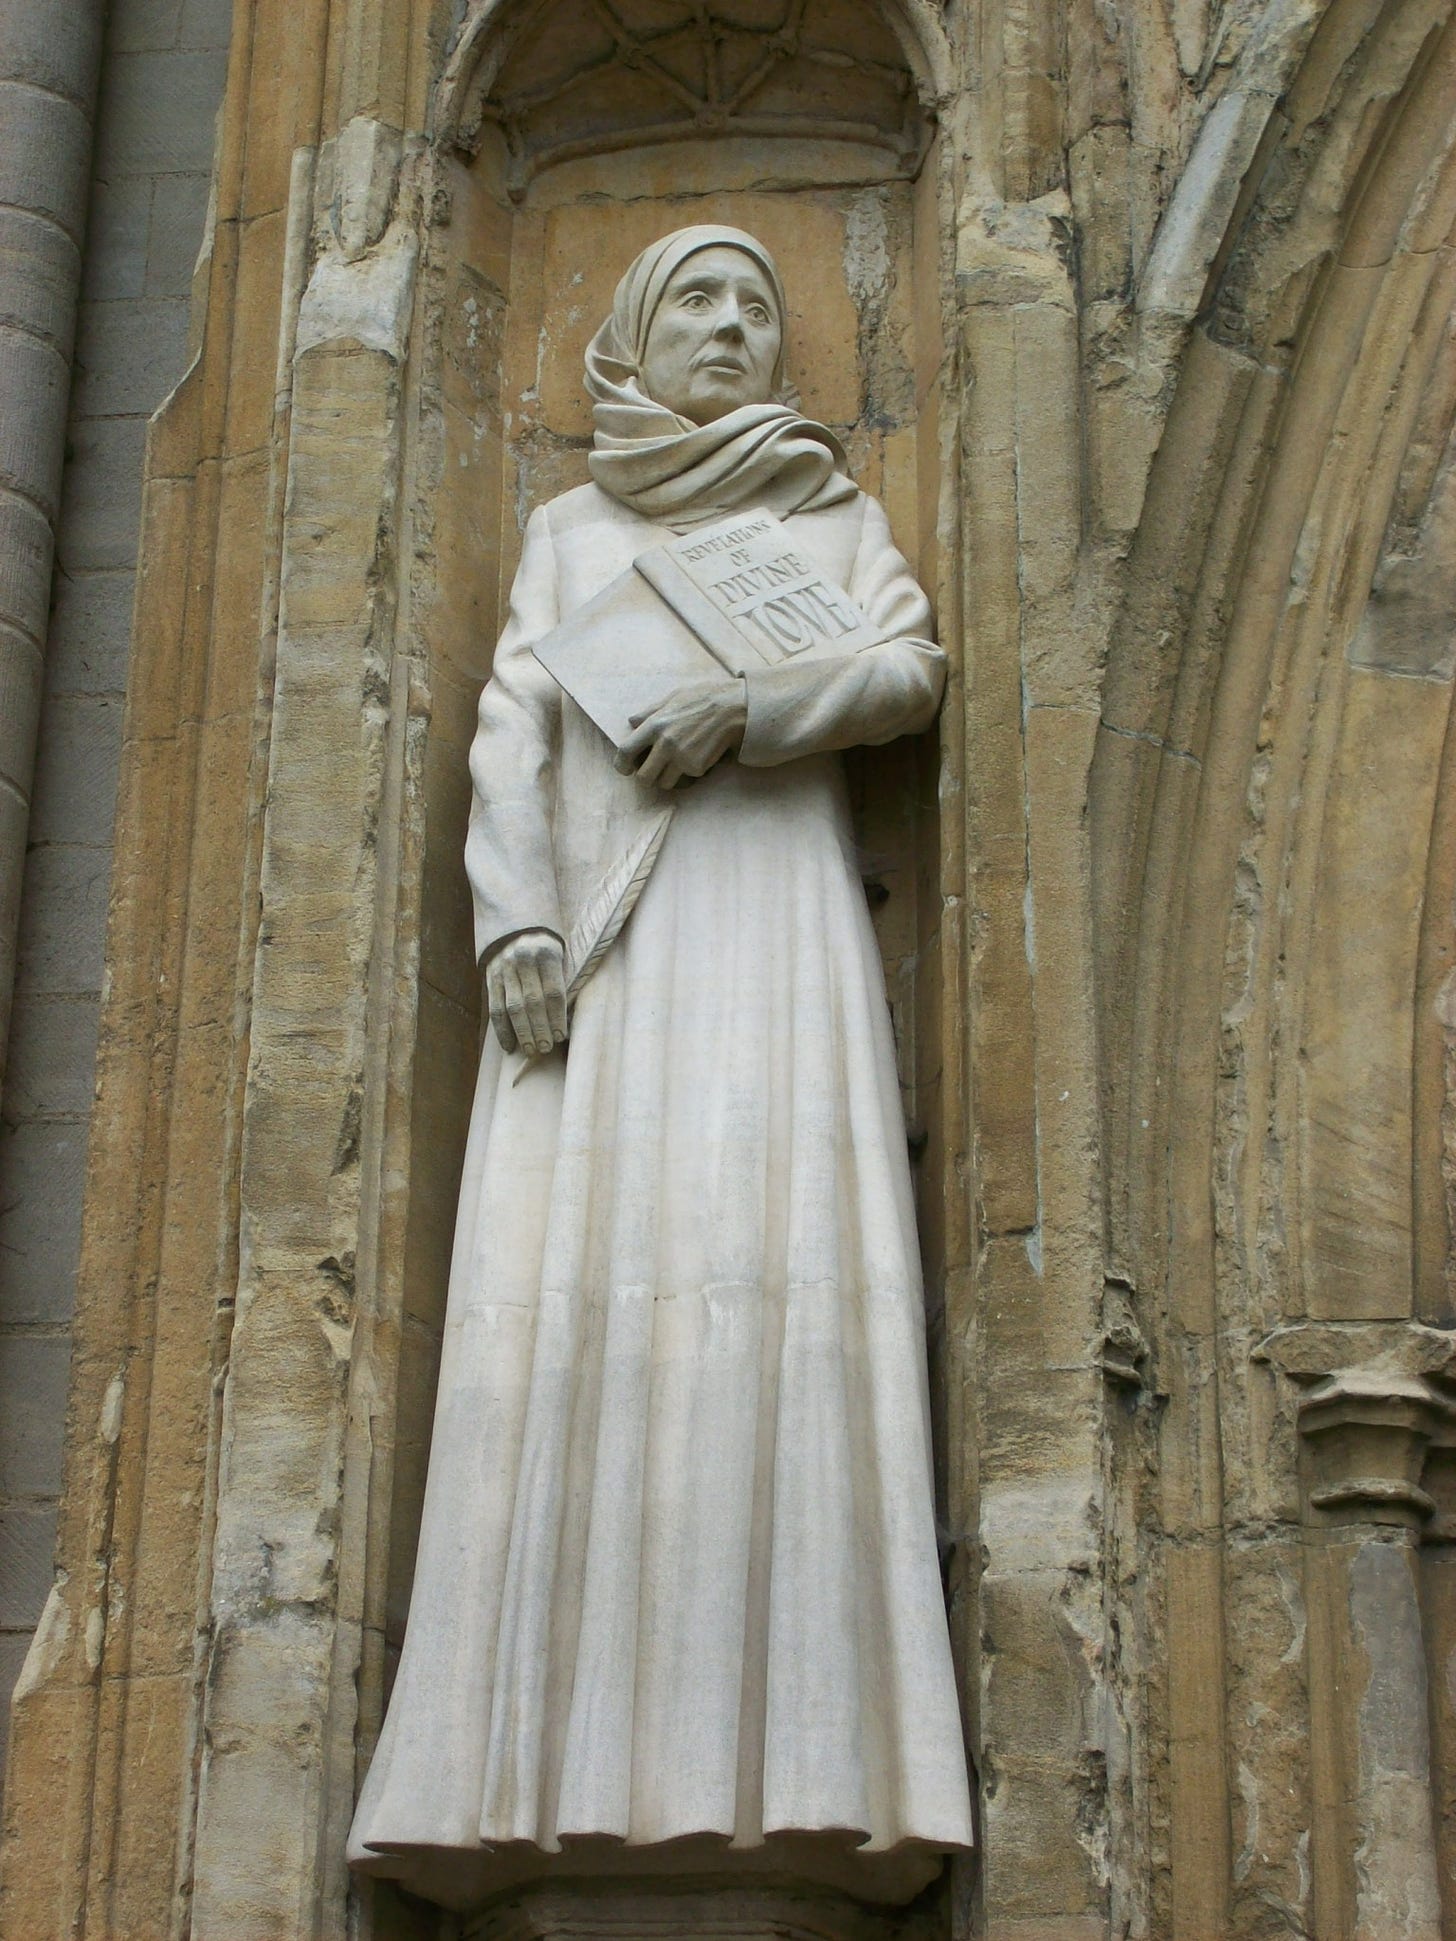 https://upload.wikimedia.org/wikipedia/commons/c/c9/Statue_of_Dame_Julian.JPG